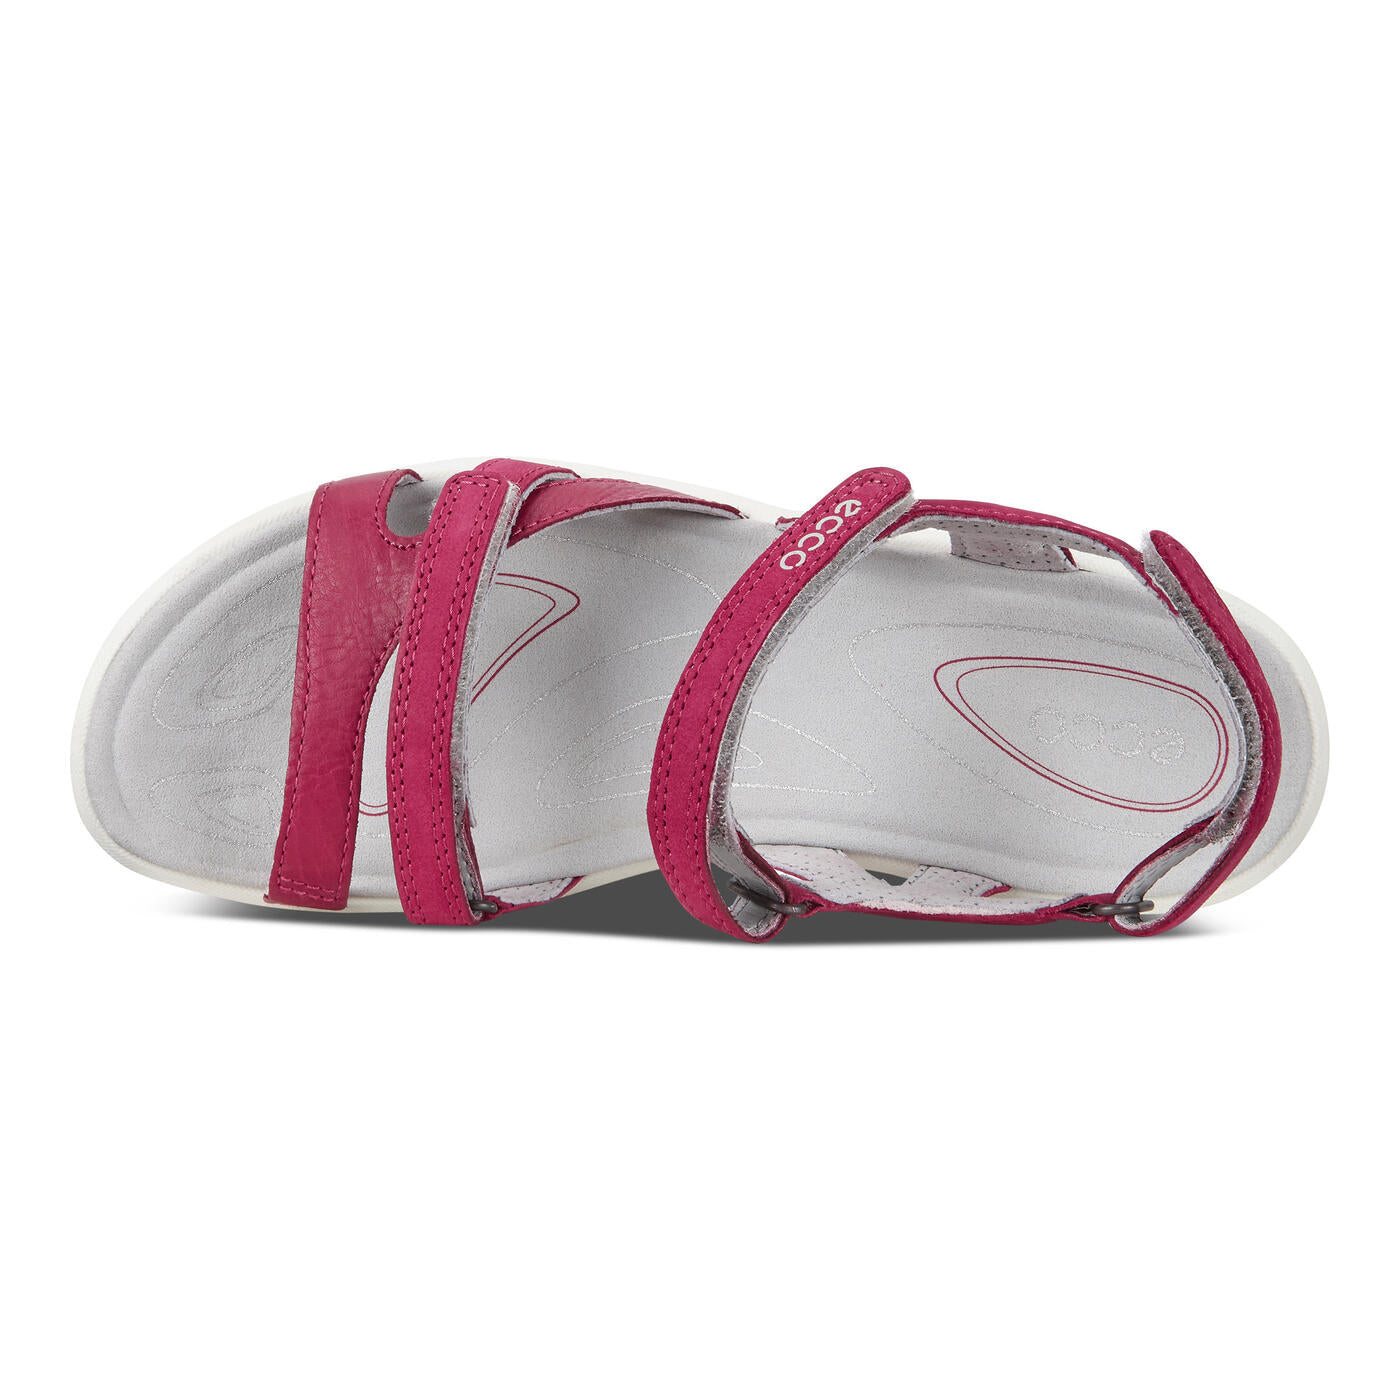 ECCO CRUISE II SANGRIA SANGRIA - getset-footwear.myshopify.com